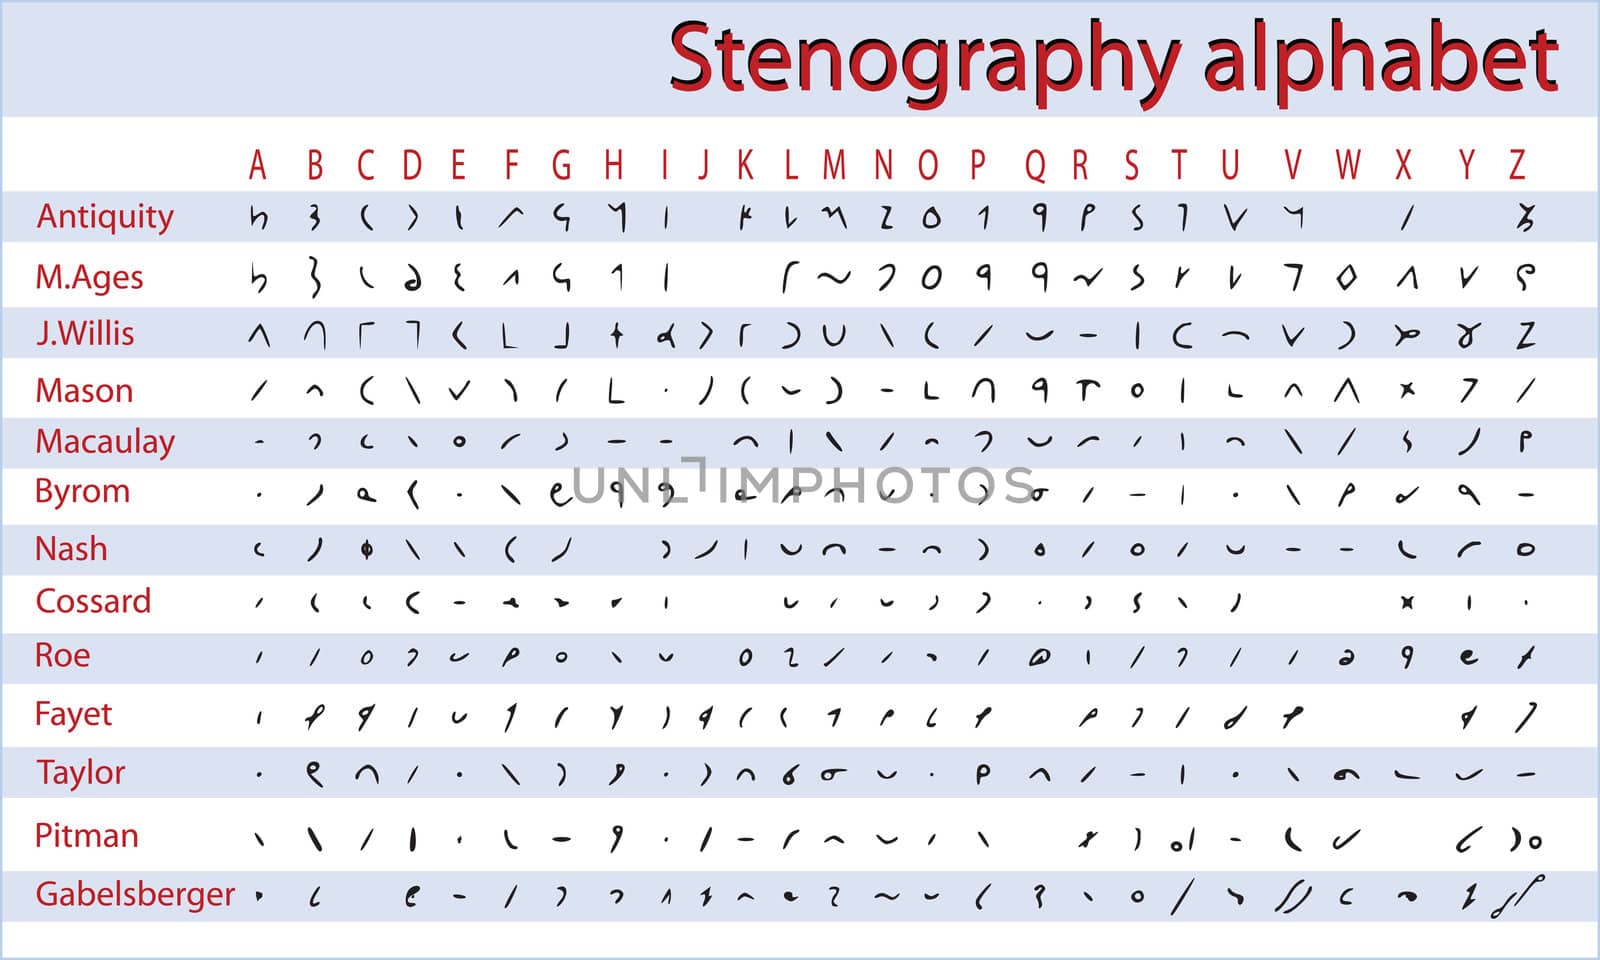 Shorthand, stenography alphabet by Lirch